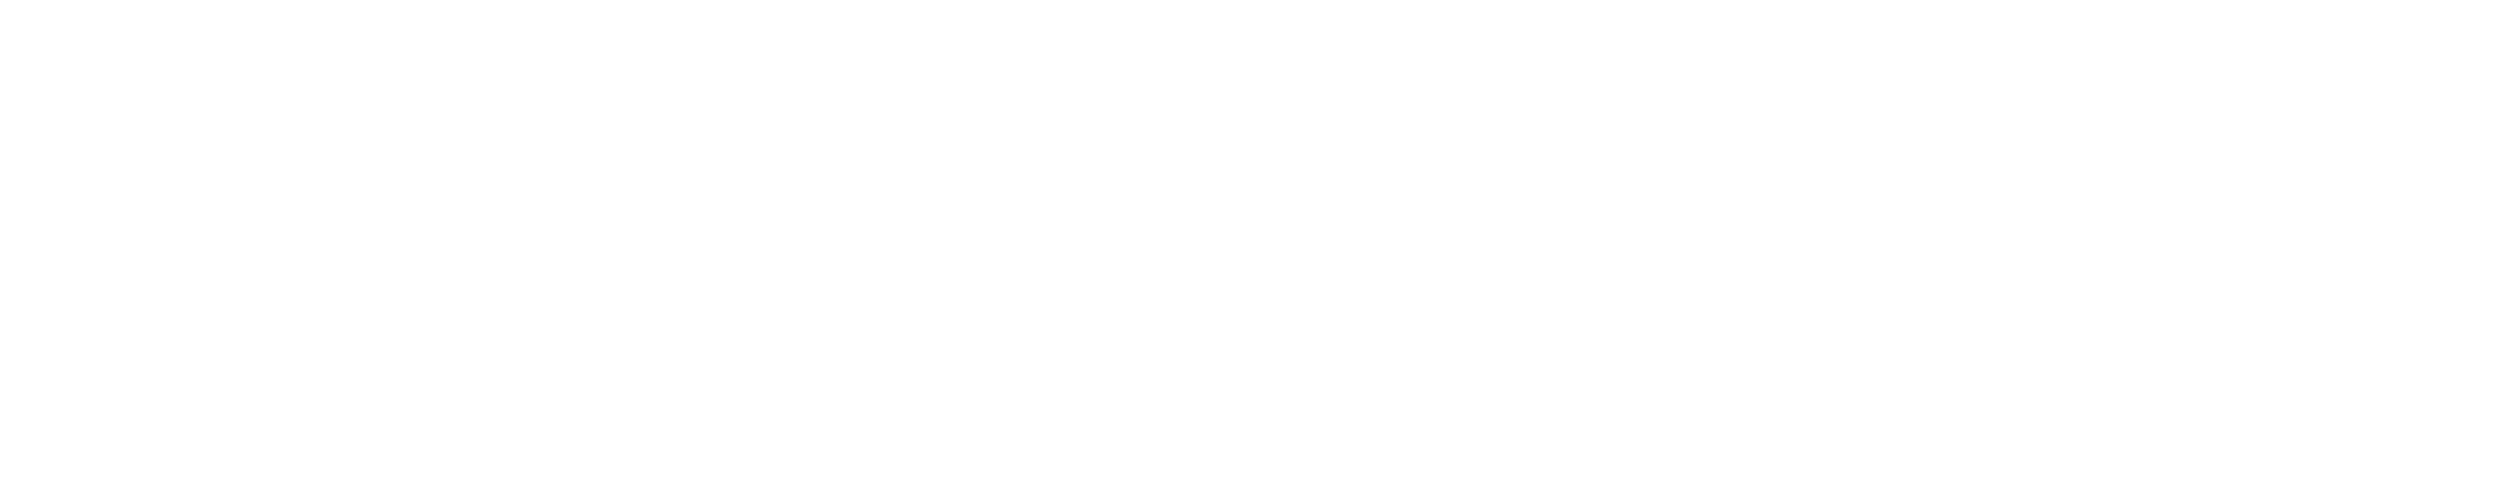 Dan J Goodrich Photography